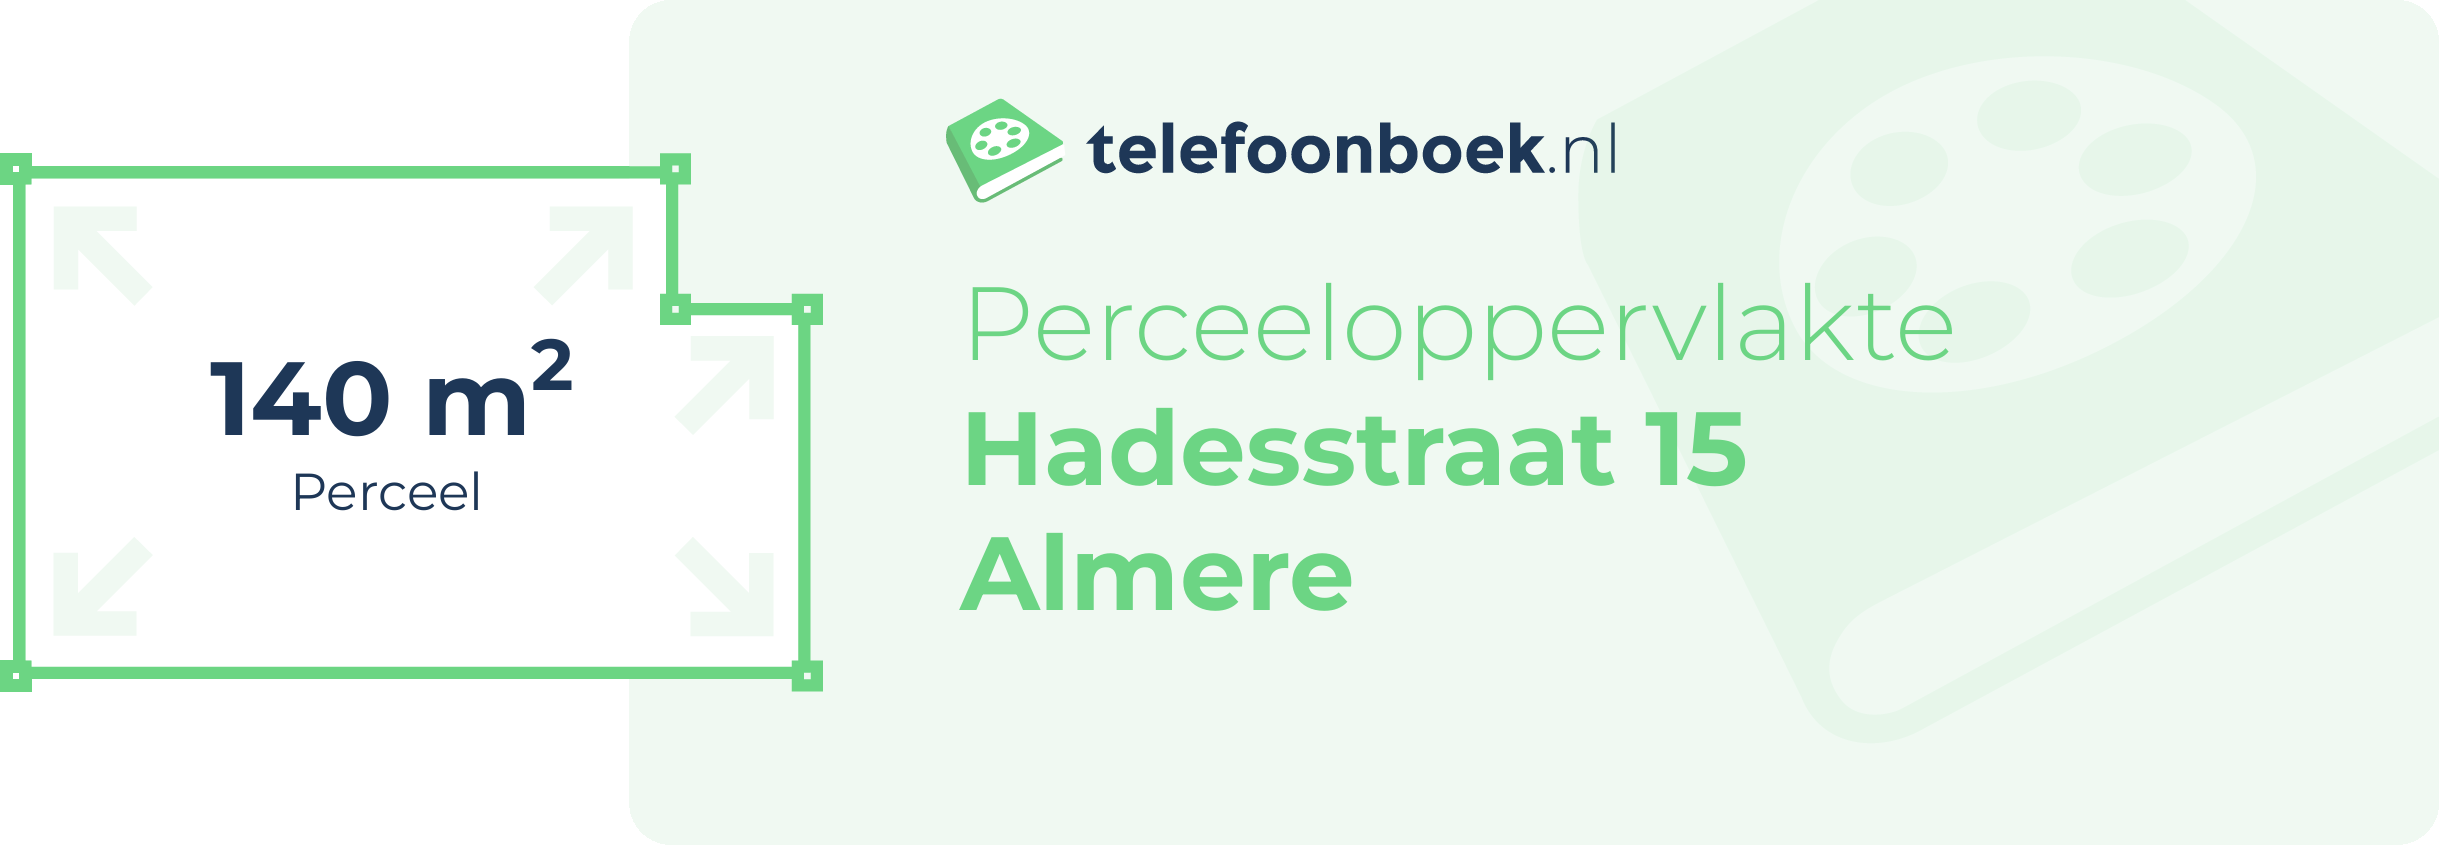 Perceeloppervlakte Hadesstraat 15 Almere